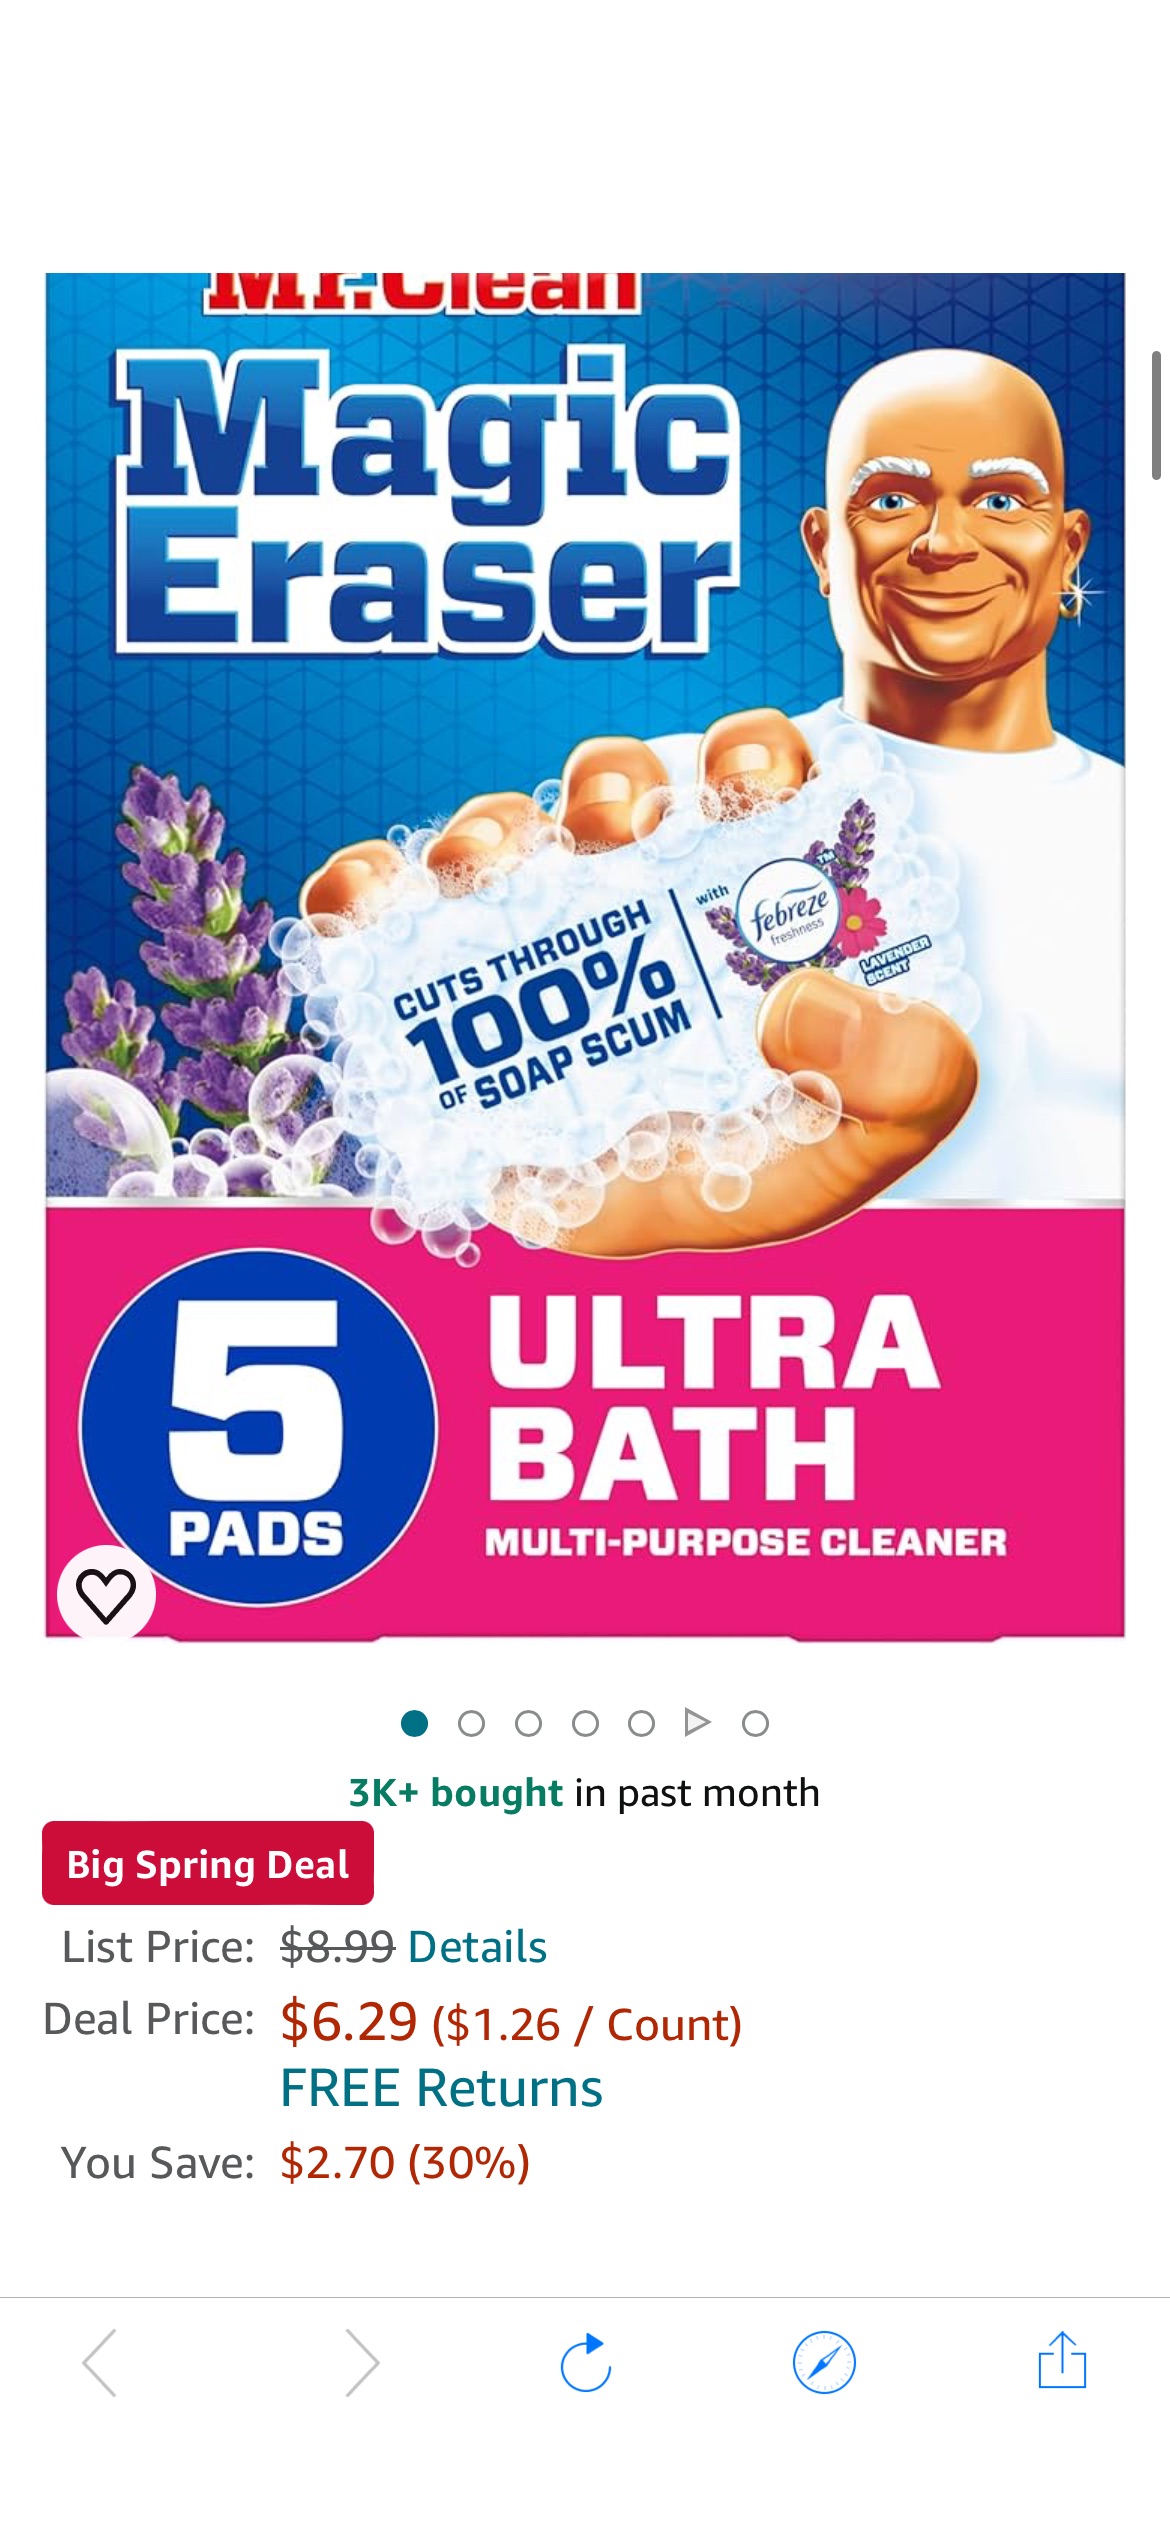 Amazon.com: Mr. Clean Magic Eraser Ultra Bath Multi Purpose Cleaner for Bathroom, Soap Scum Remover for Shower, 5ct : Health & Household